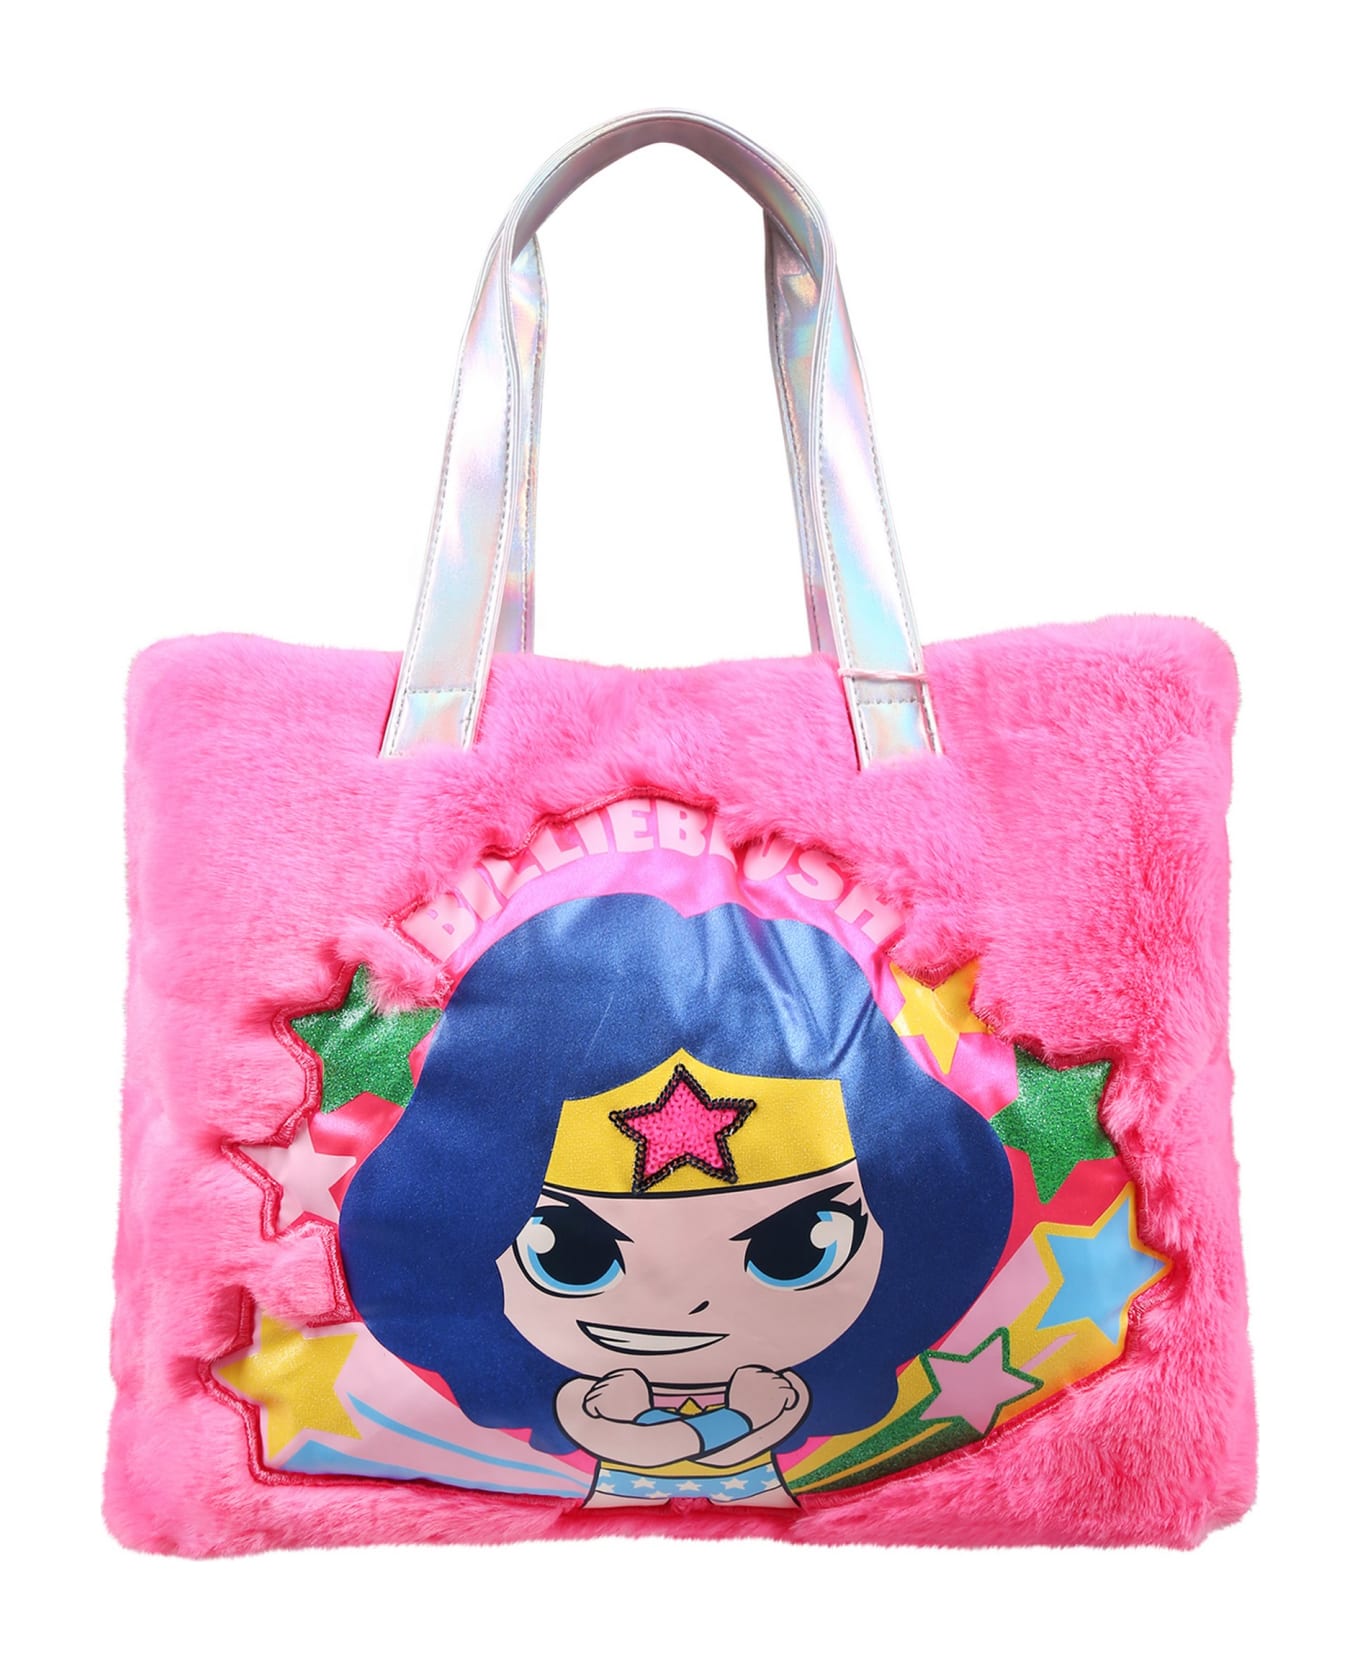 Billieblush Fuchsia Bag For Girl With Wonder Woman - Fuchsia